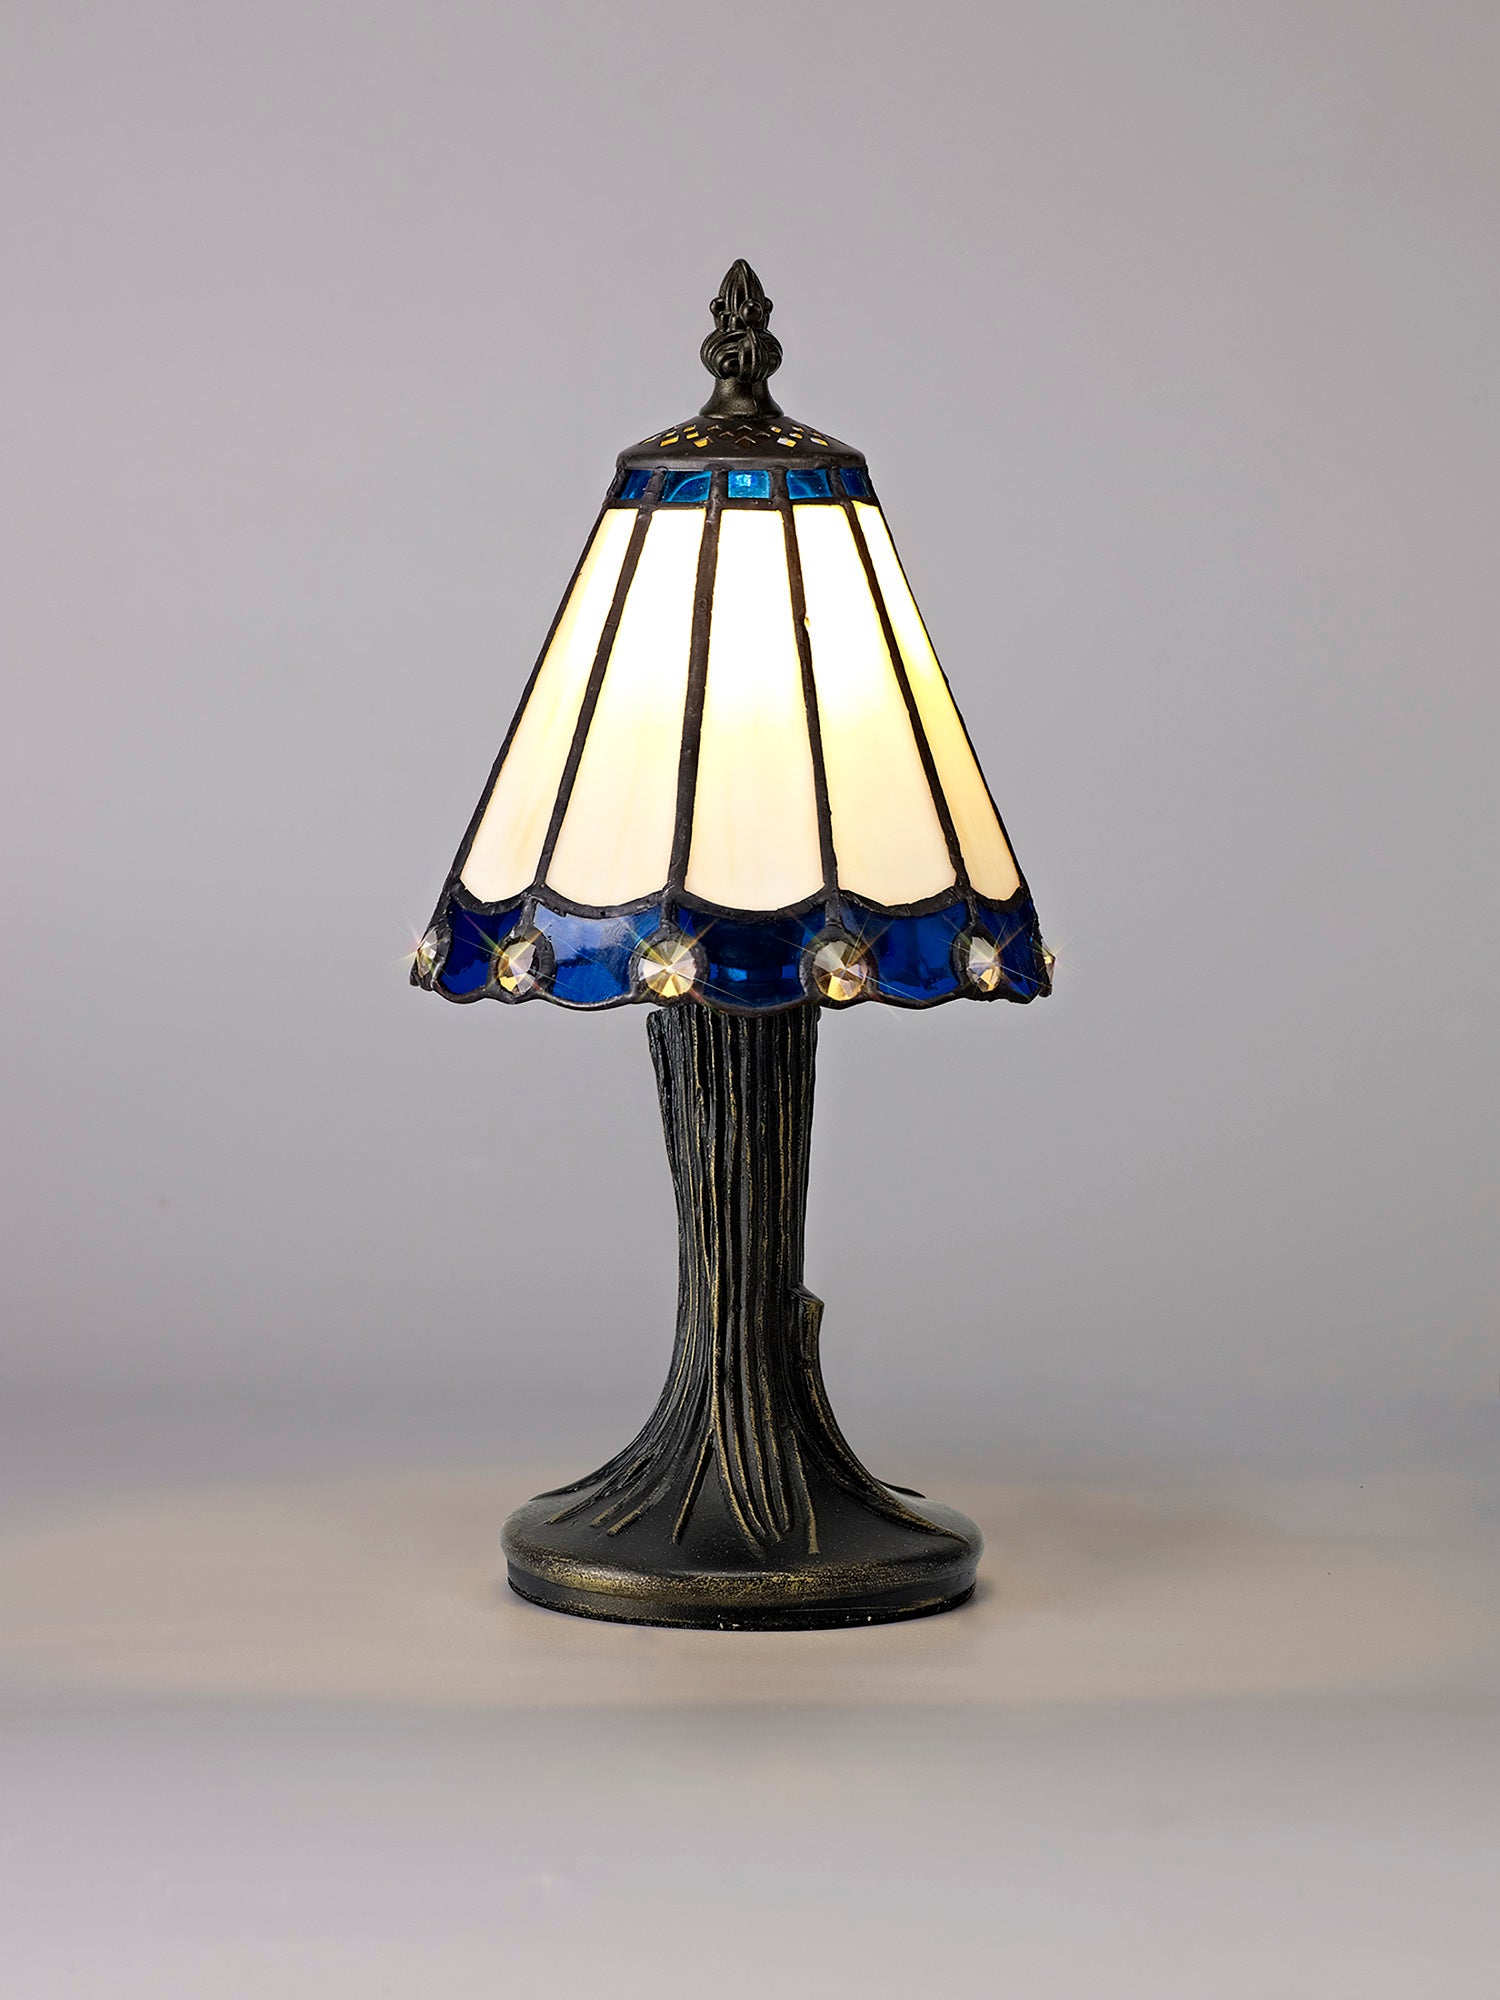 Umbrella Tiffany Table Lamp, 1 x E14, Crealm/Blue/Clear Crystal Shade